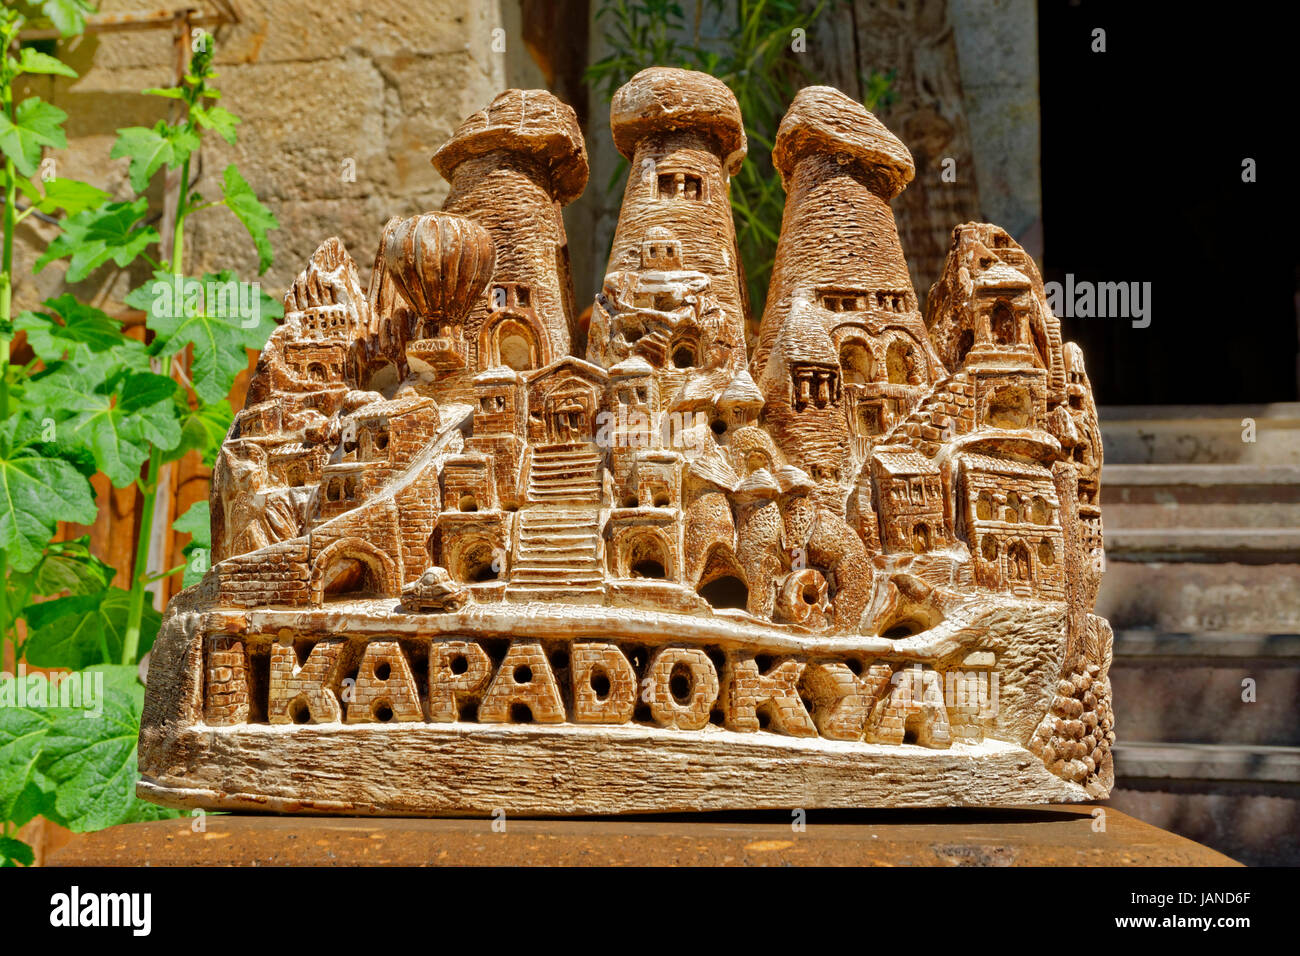 Souvenir model representing the character of Cappadocia in Turkey. Stock Photo